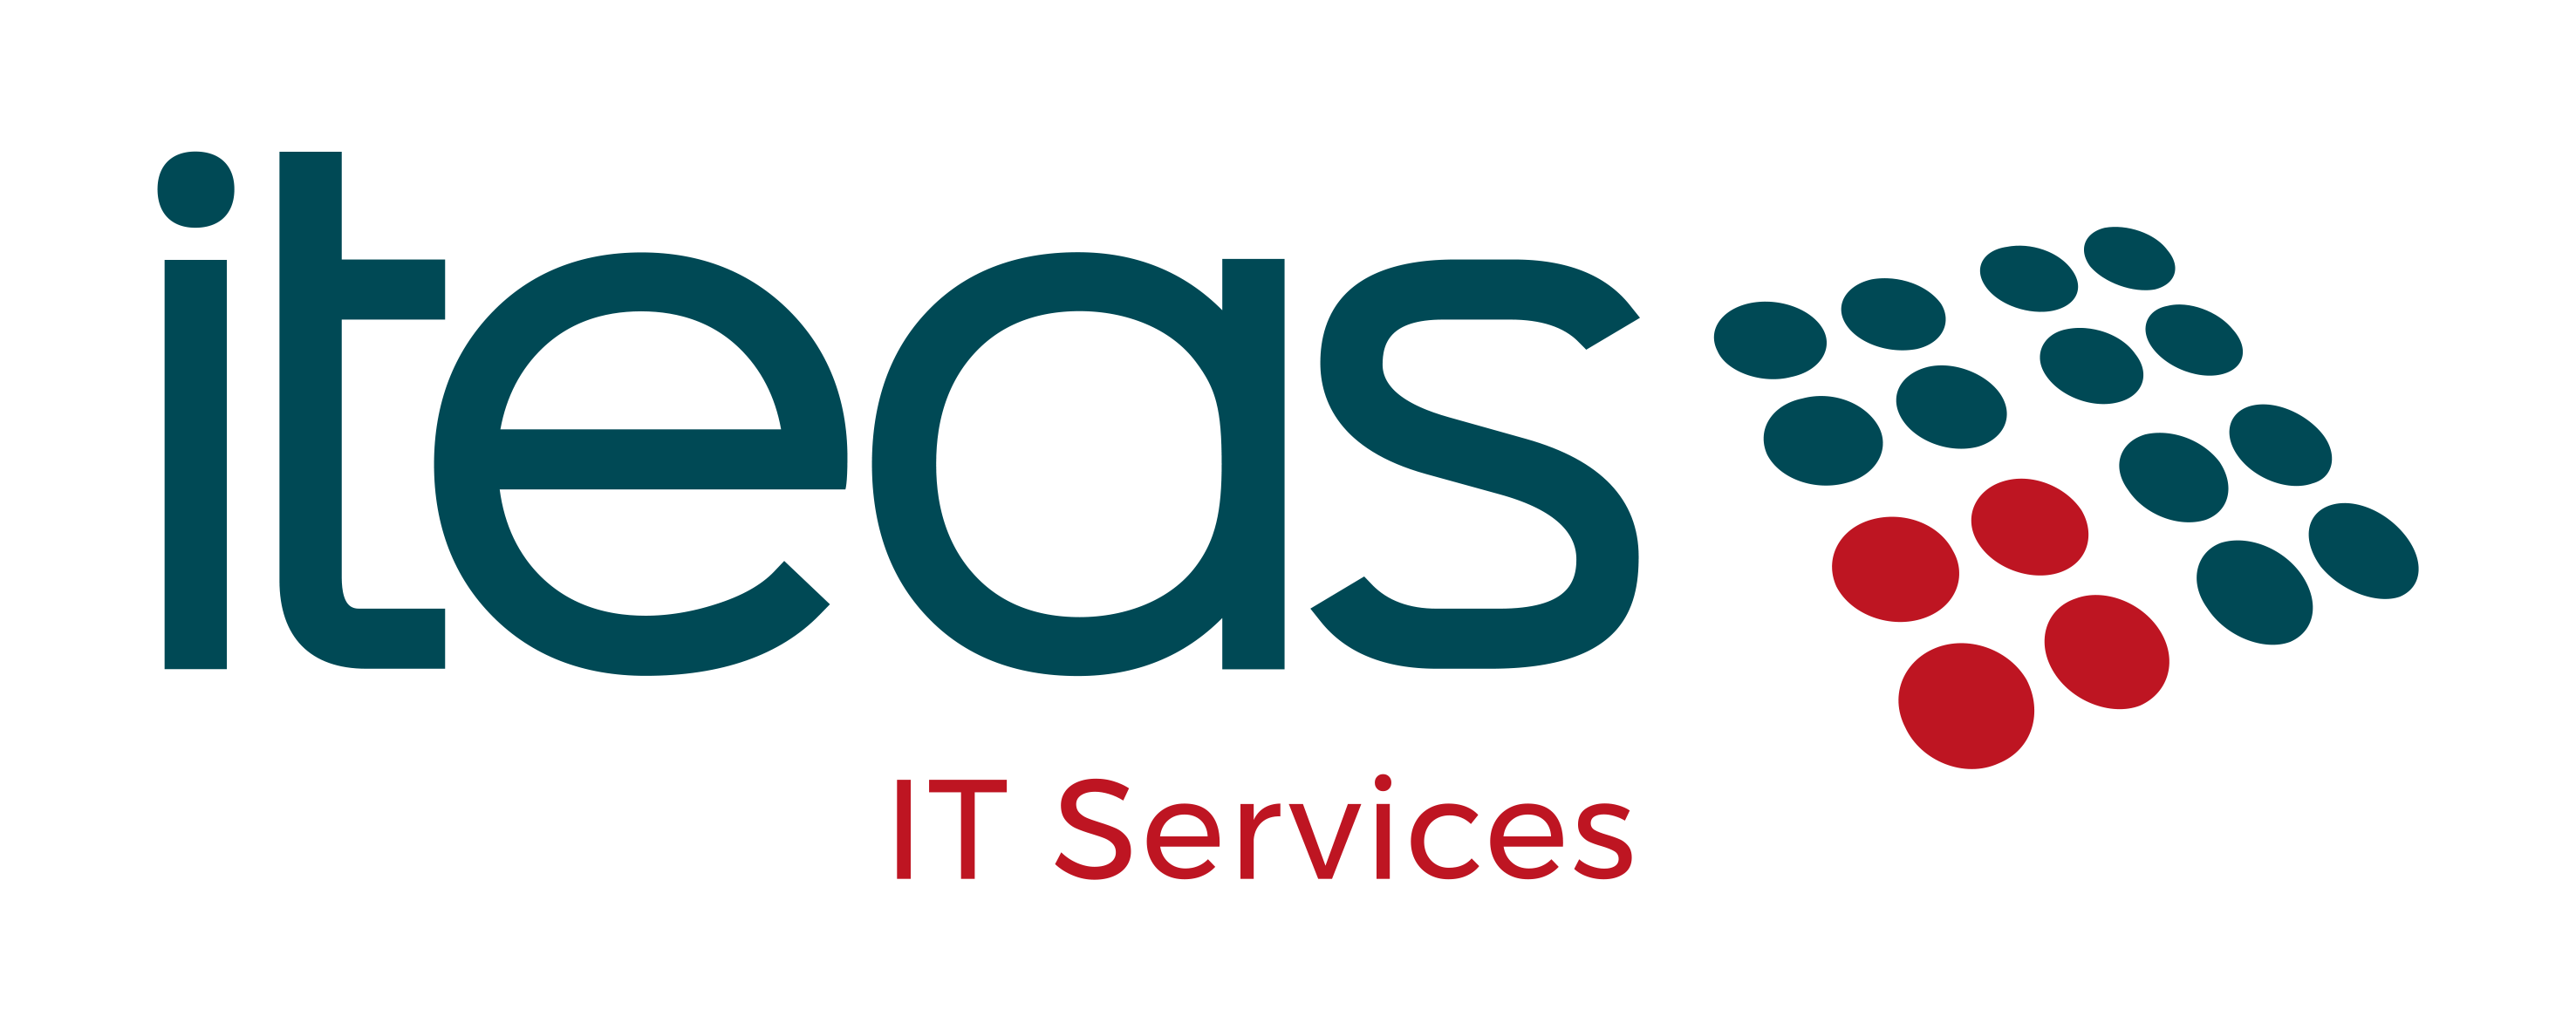 Iteas IT Services Logo